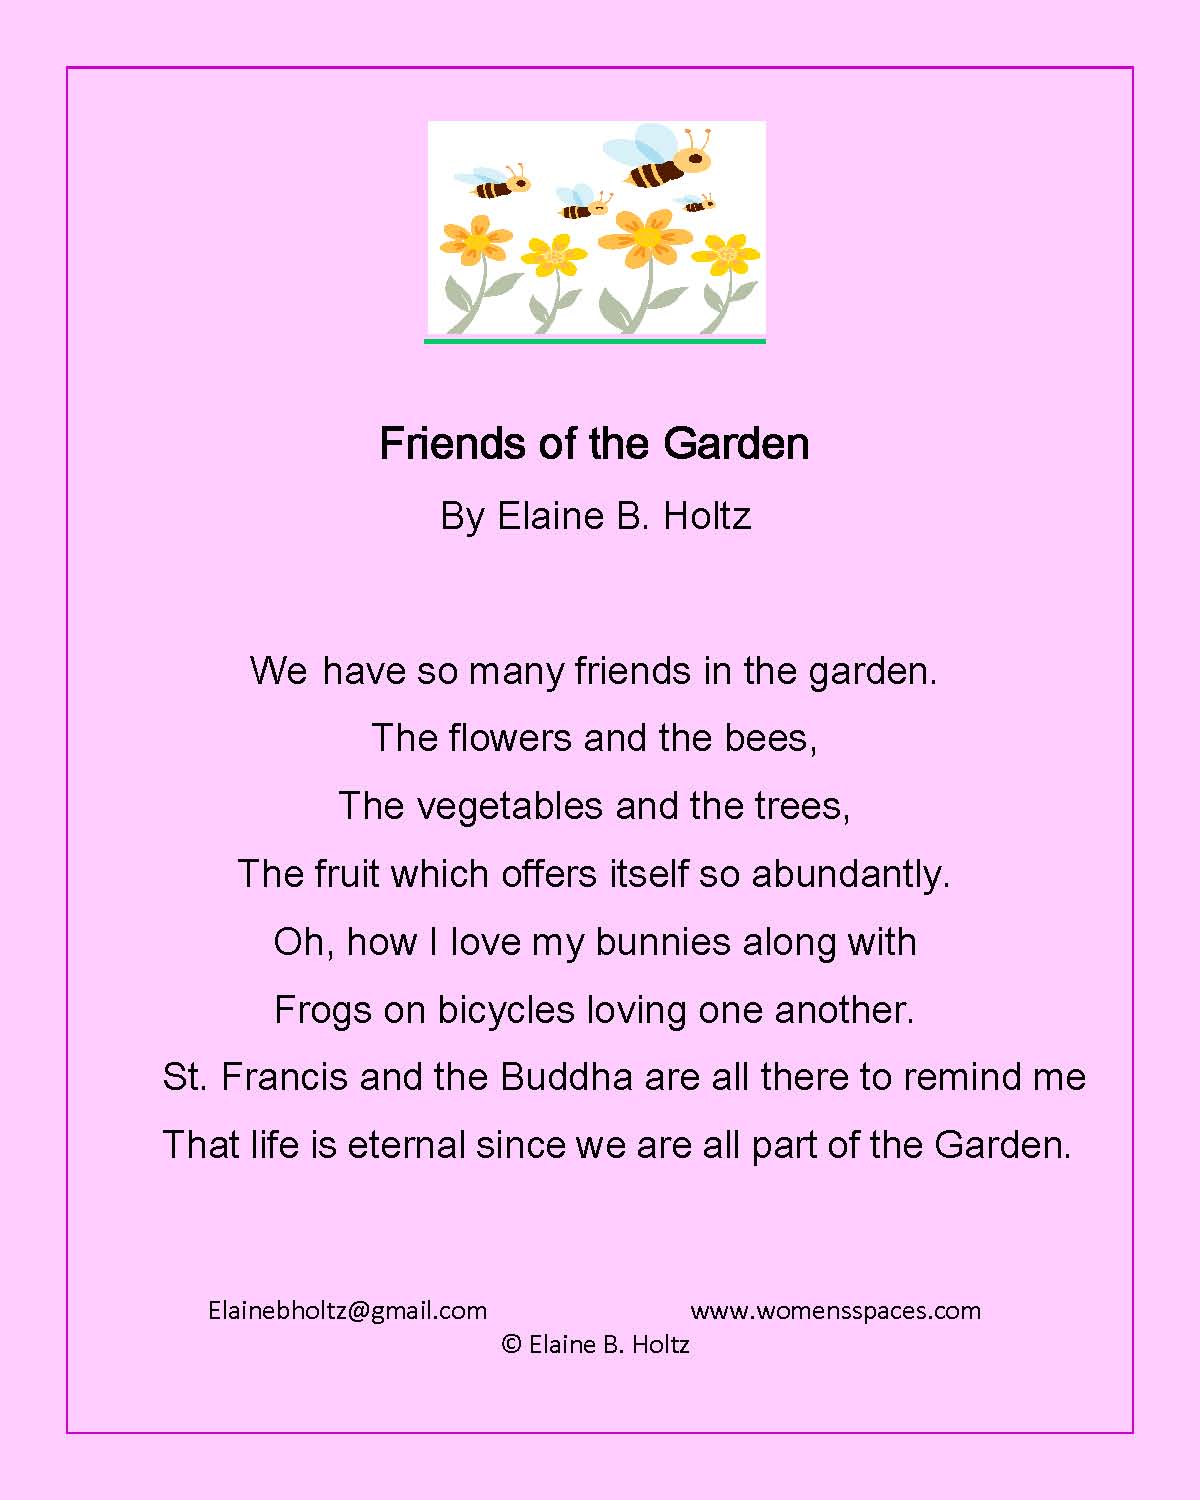 Friends of the Garden by Elaine B. Holtz